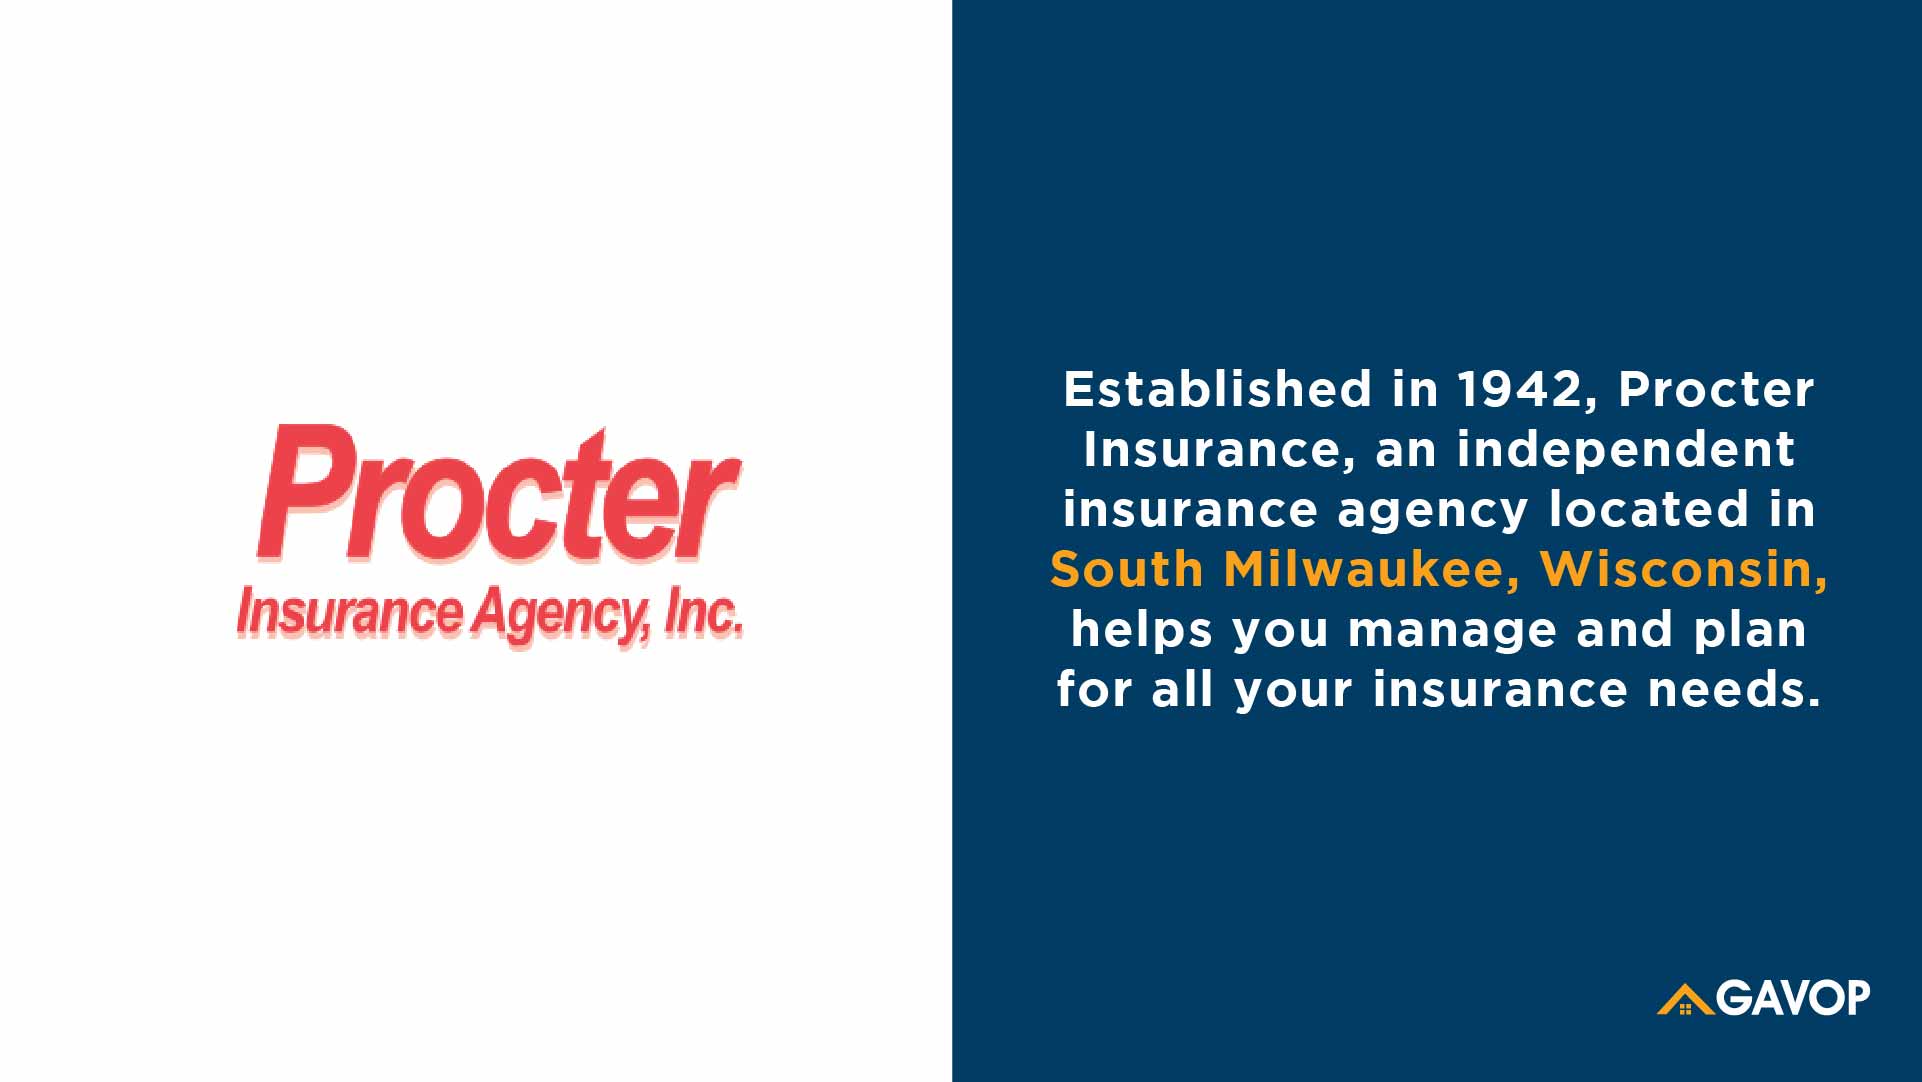 Procter Insurance Agency